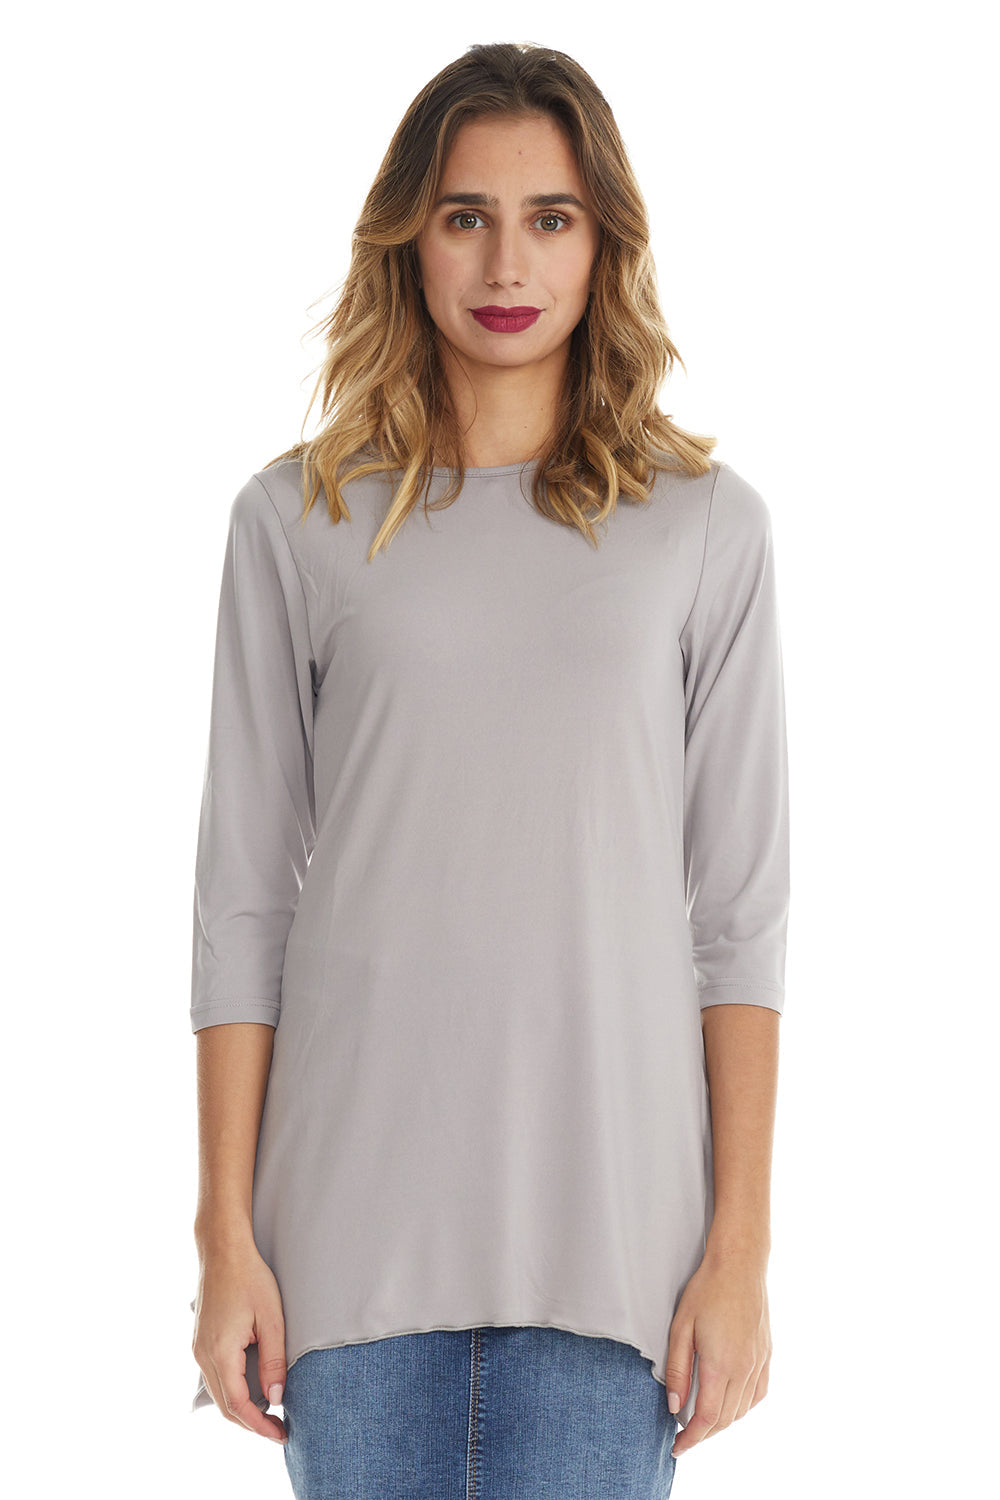 grey 3/4 sleeve tunic t-shirt